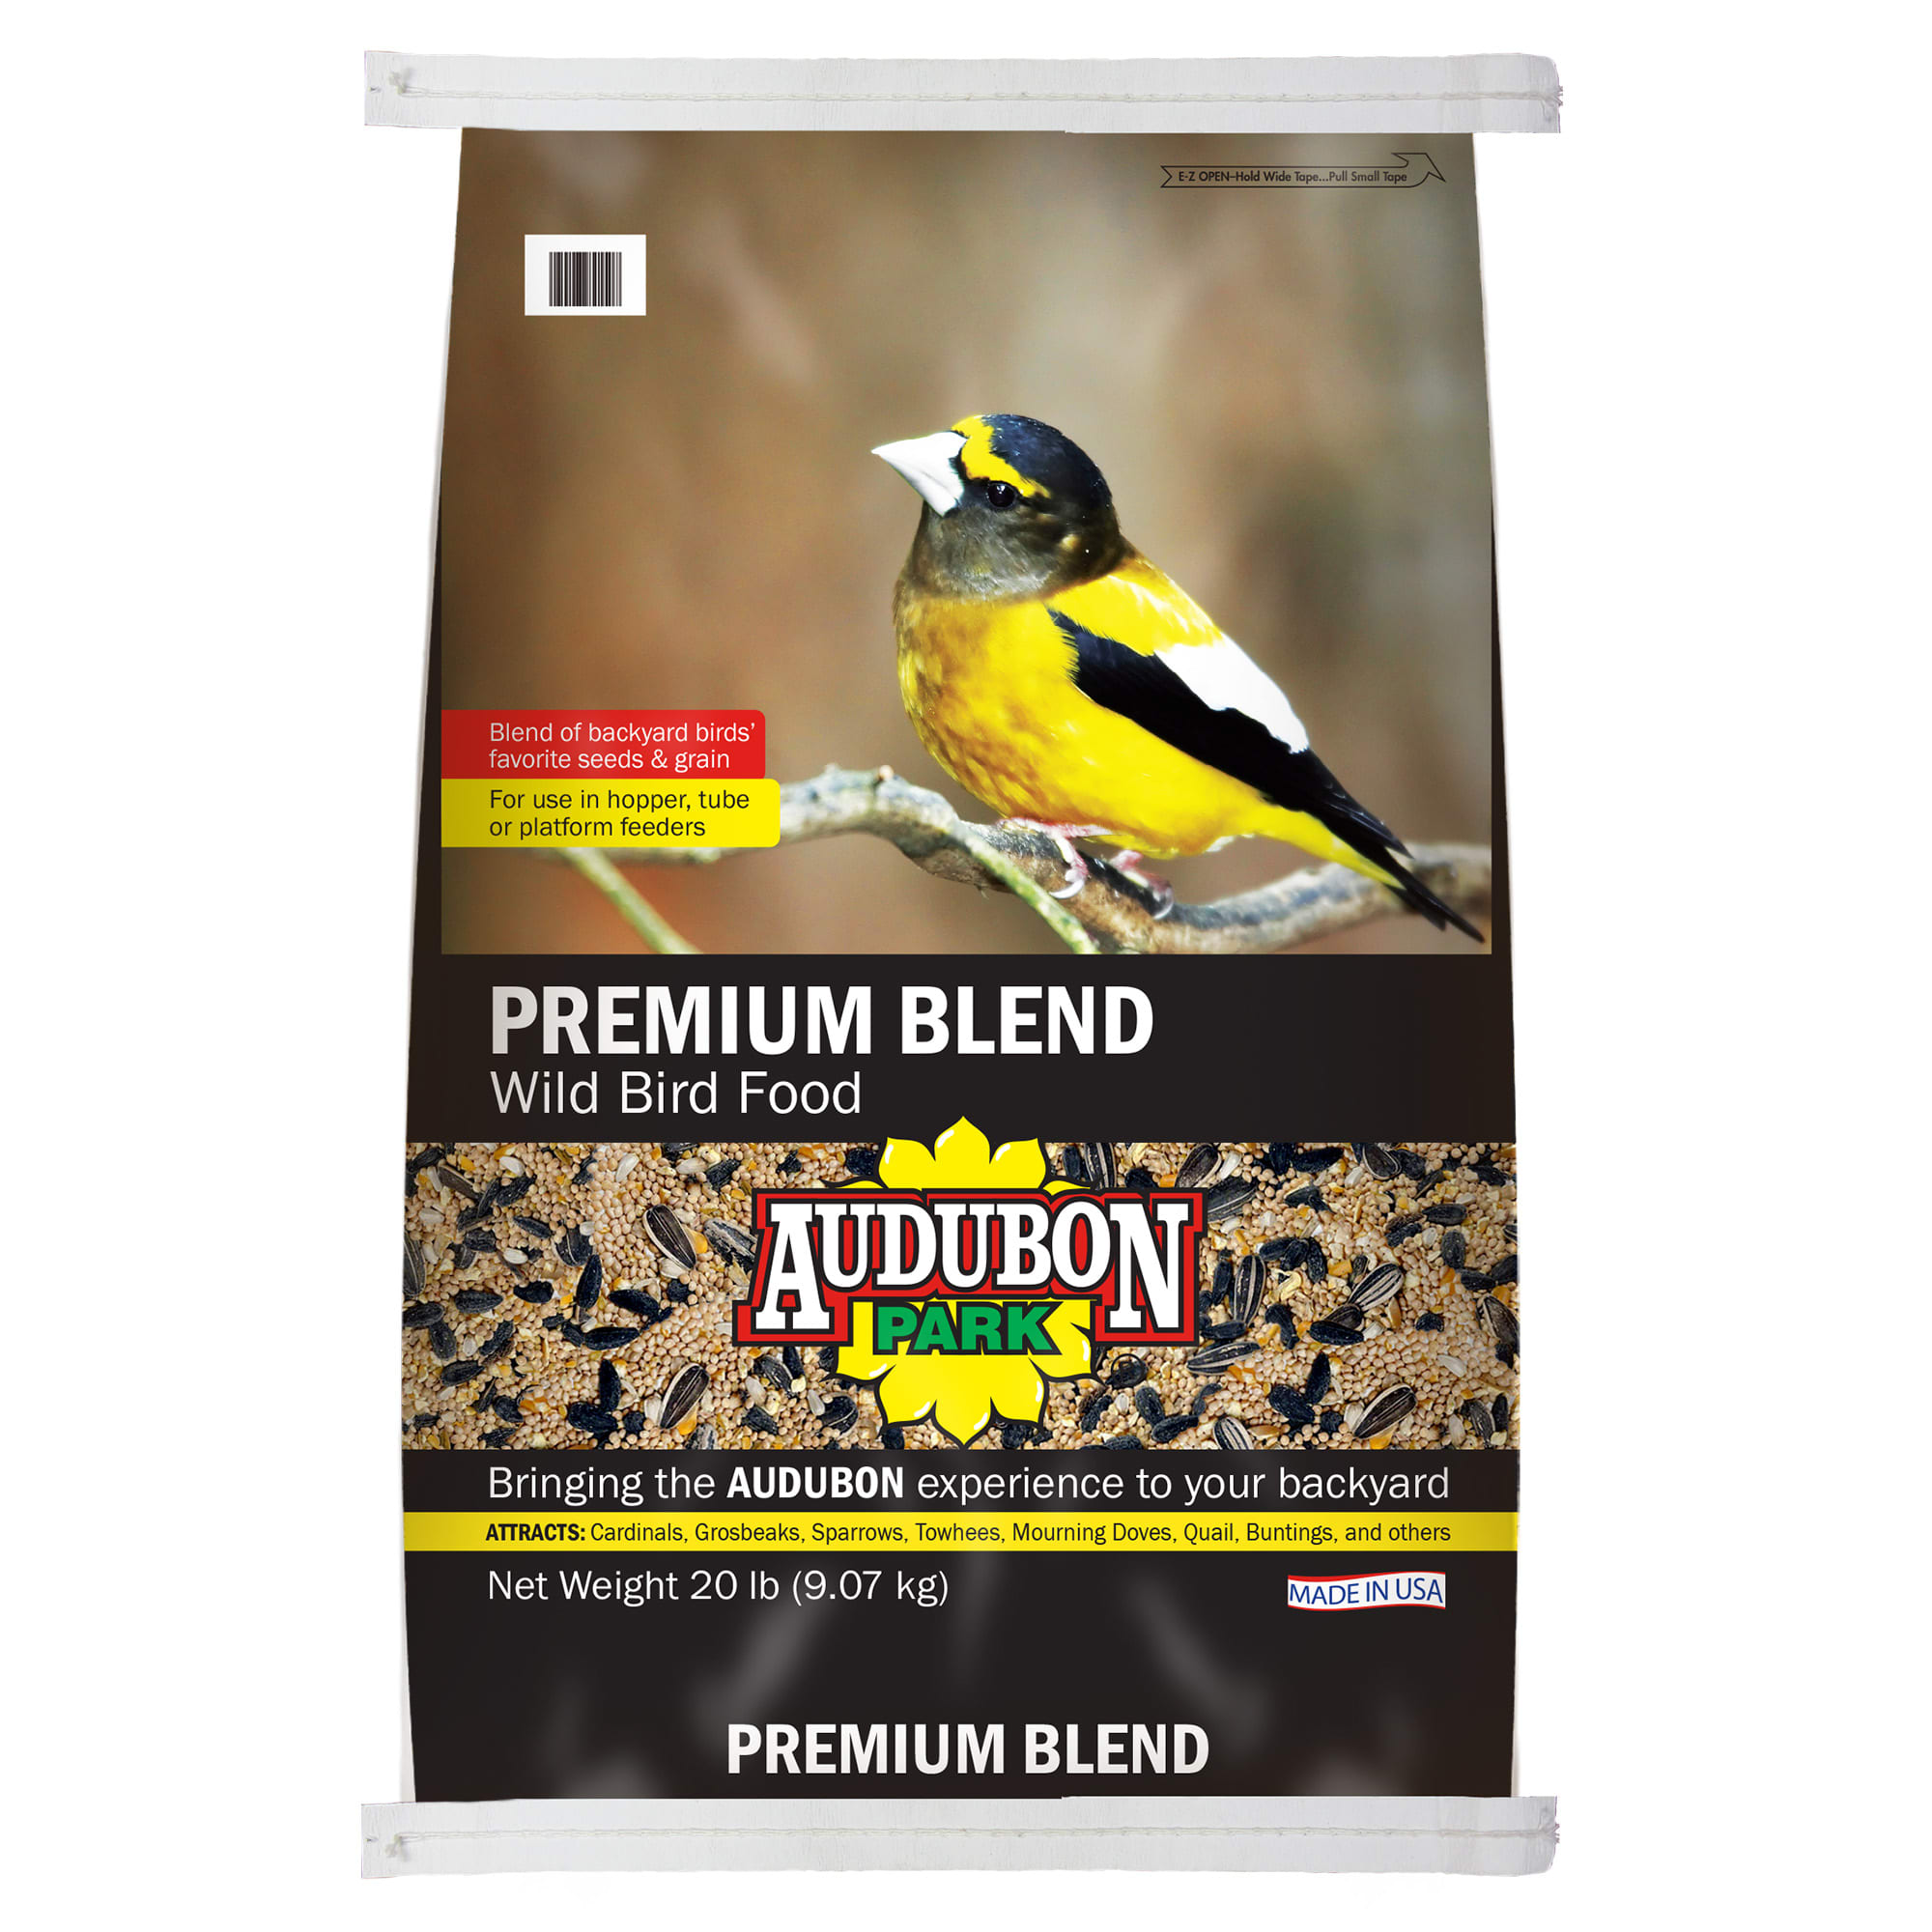 Purina® Premium Picnic Bird Food  Feed Wild Birds – Purina Animal Nutrition